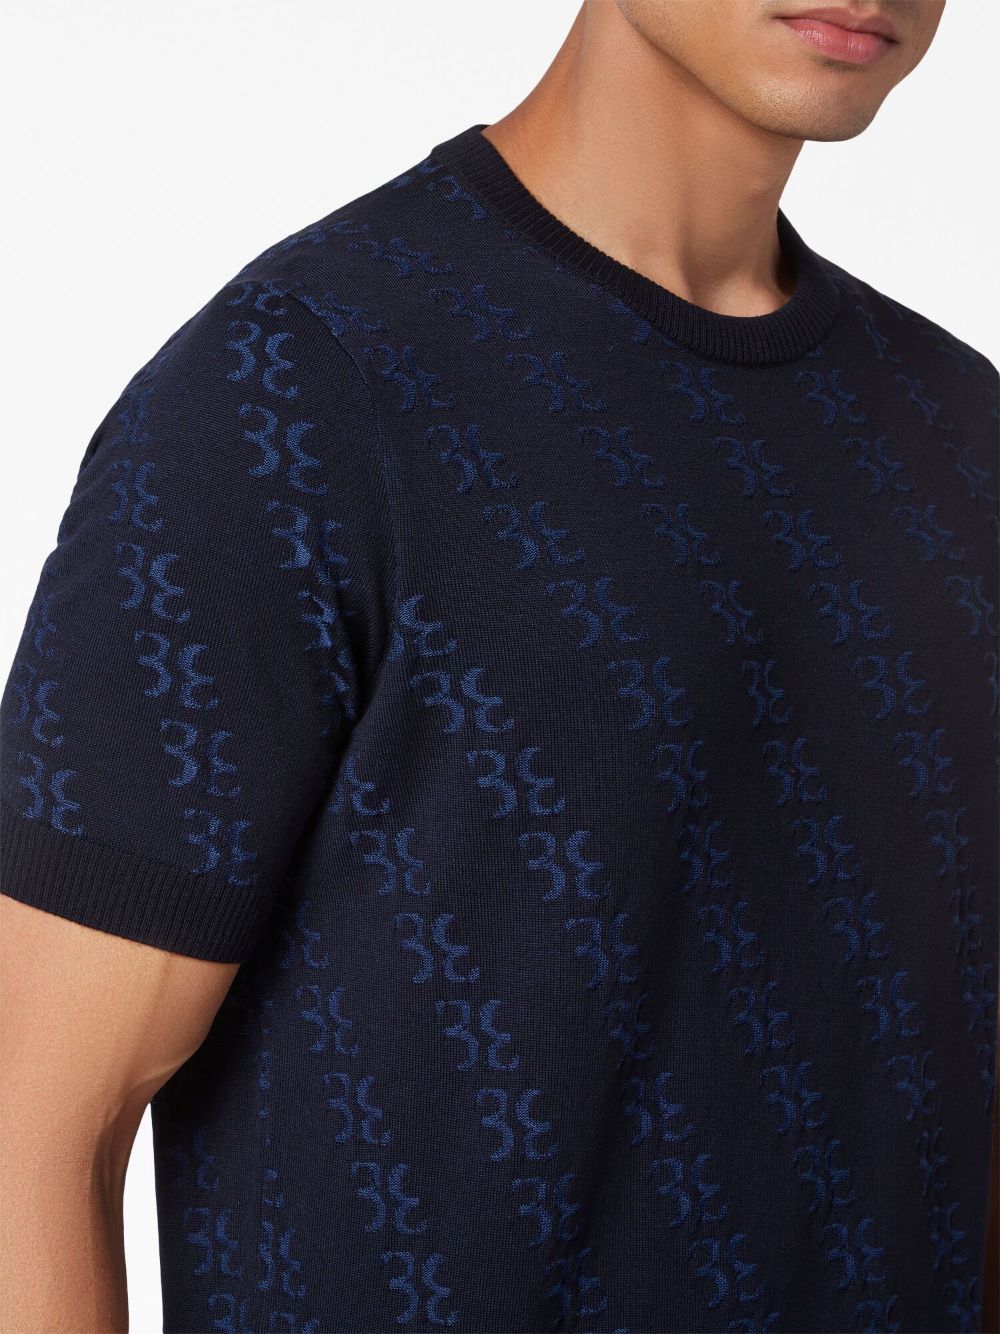 Louis Vuitton Jacquard Tee Shirt